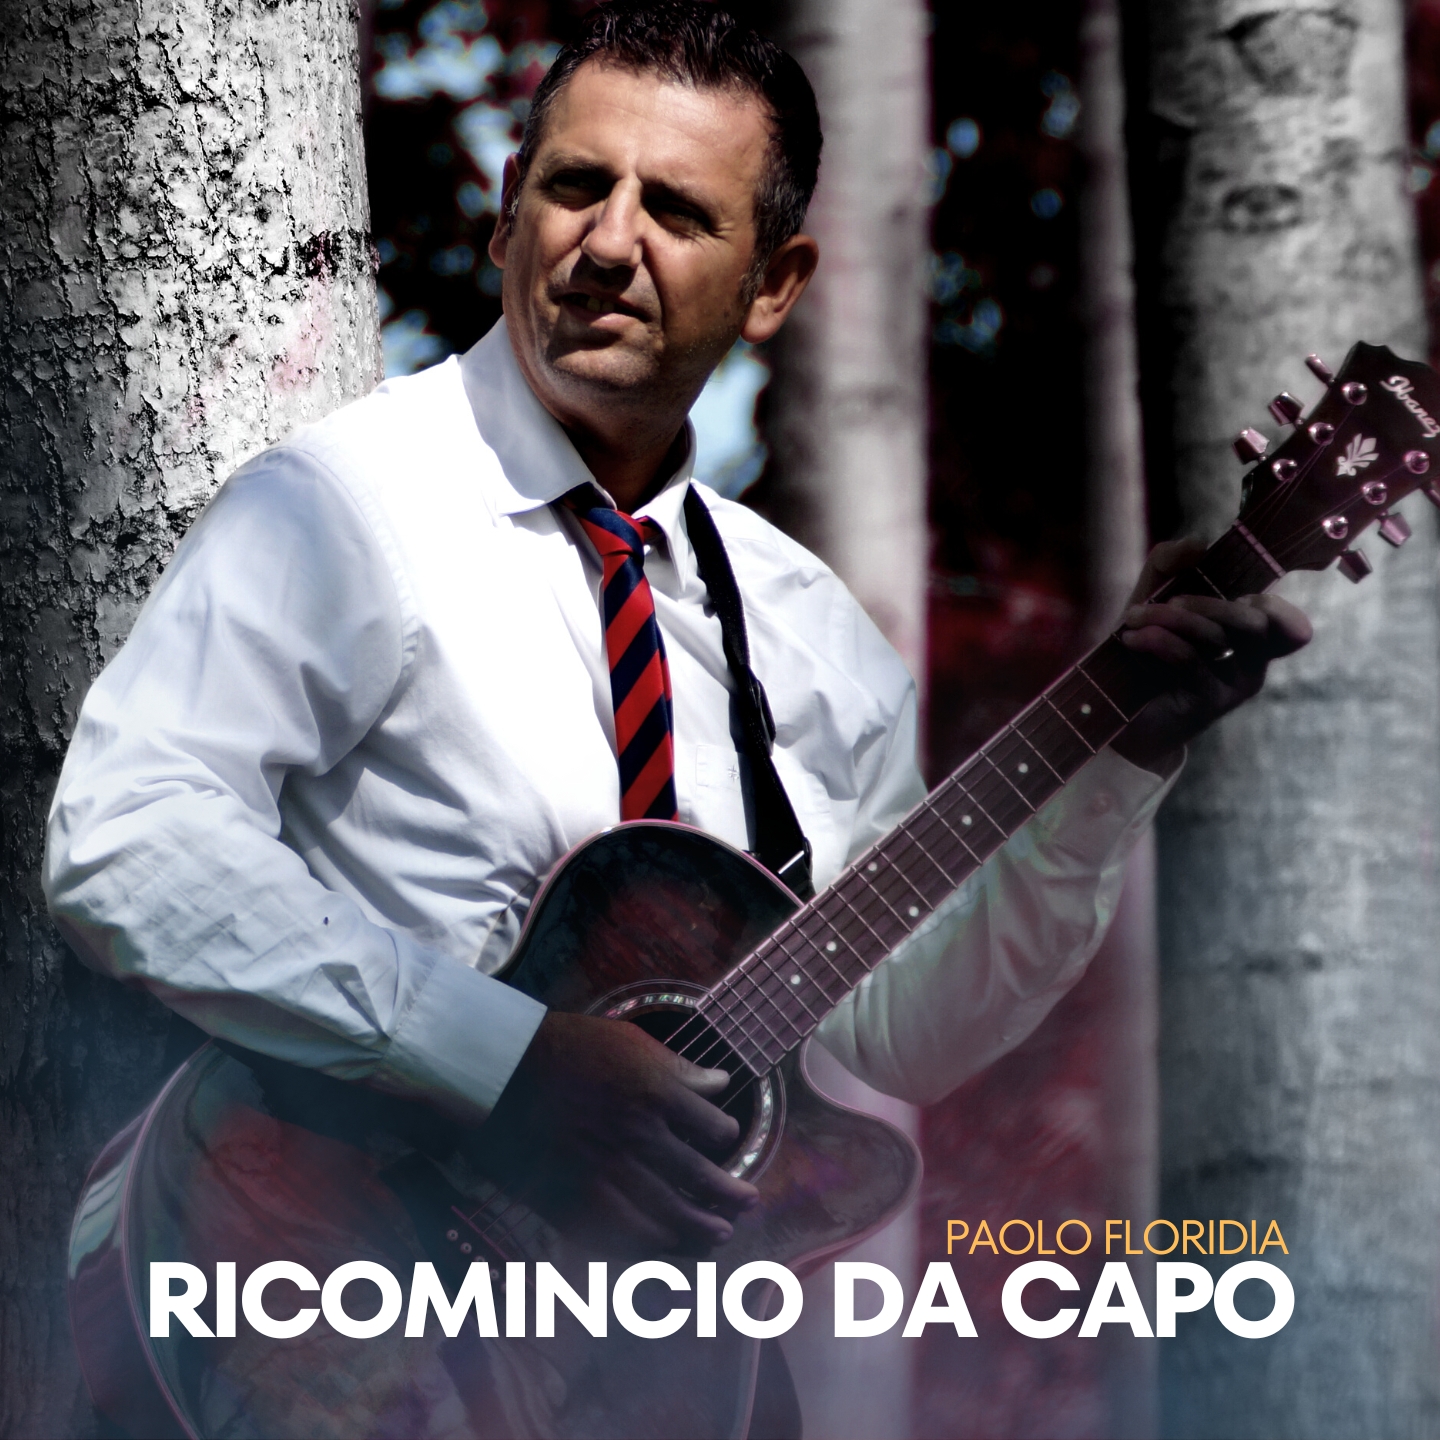 Paolo-Floridia-Ricomincio-da-capo-COVER.jpg